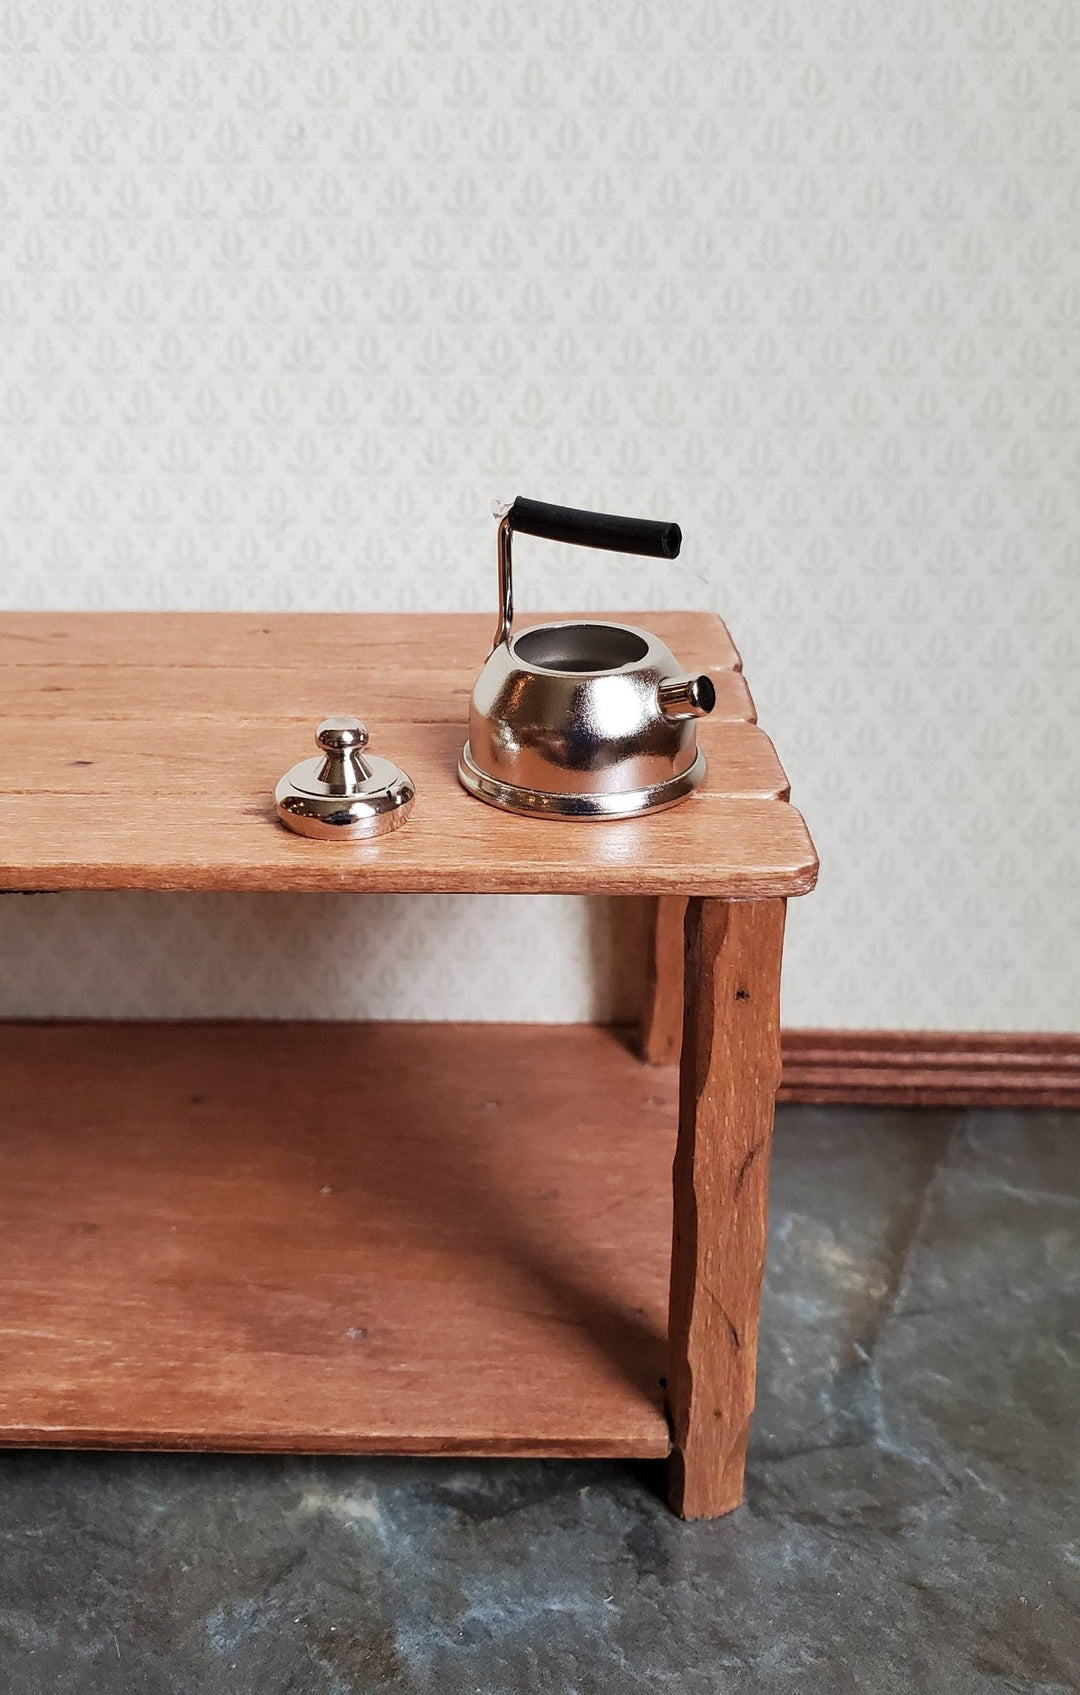 Dollhouse Miniature Teapot Kettle Modern Silver & Black 1:12 Scale Kitchen Accessories - Miniature Crush